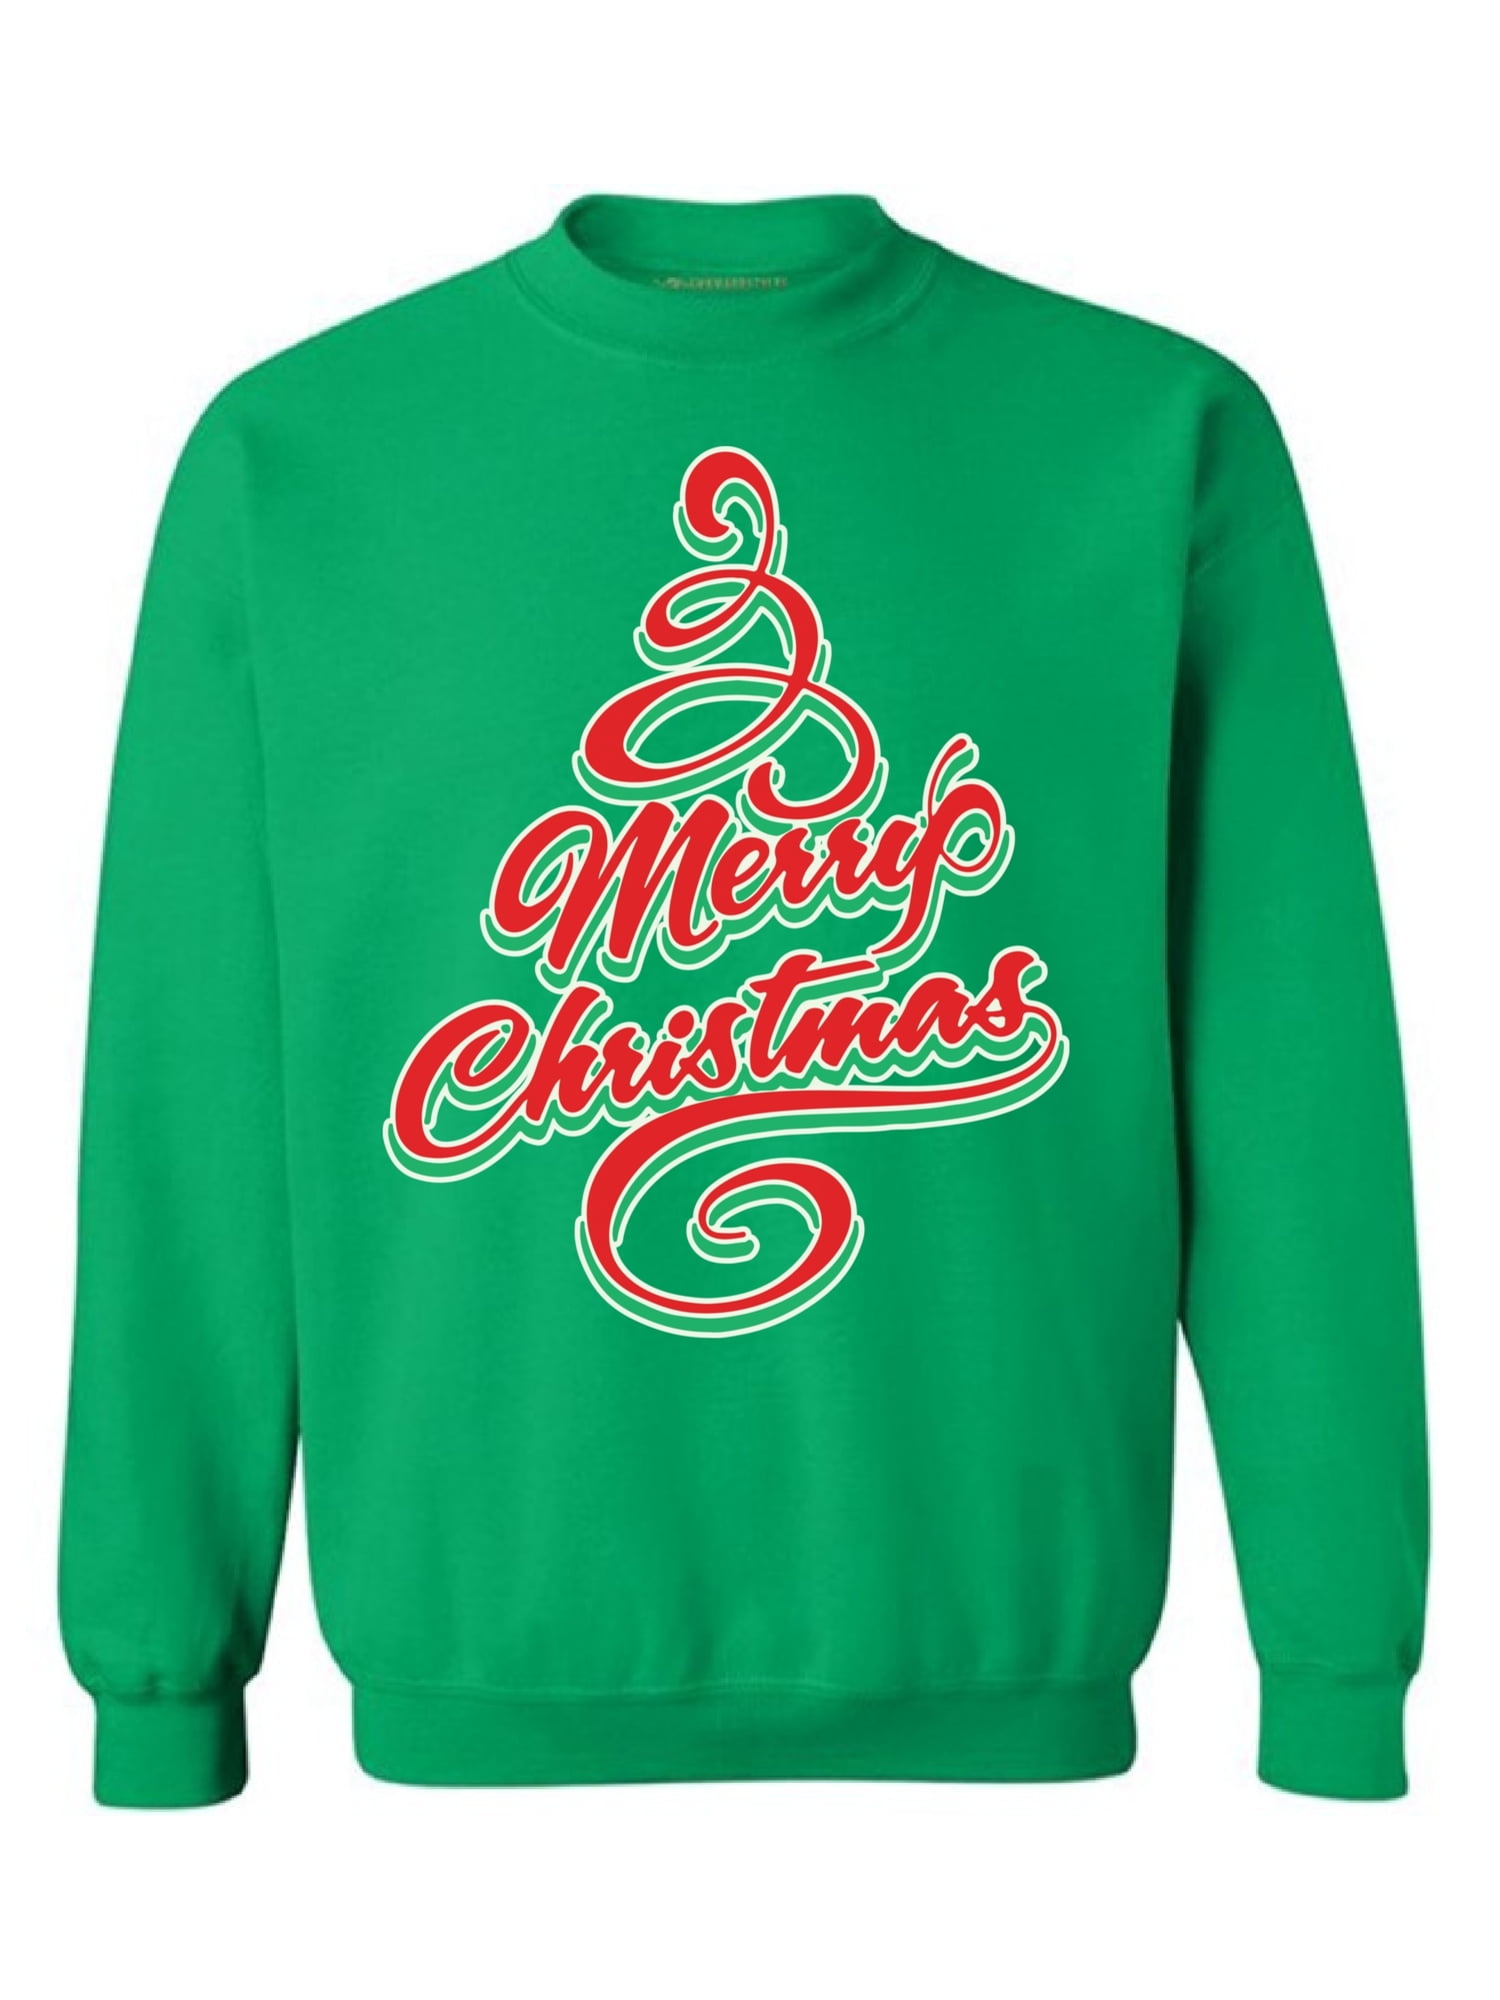 Family Sweatshirt Holiday Sweaters Ugly Christmas Christmas Sweatshirt New year Ugly Christmas Sweater Merry Christmas sweater